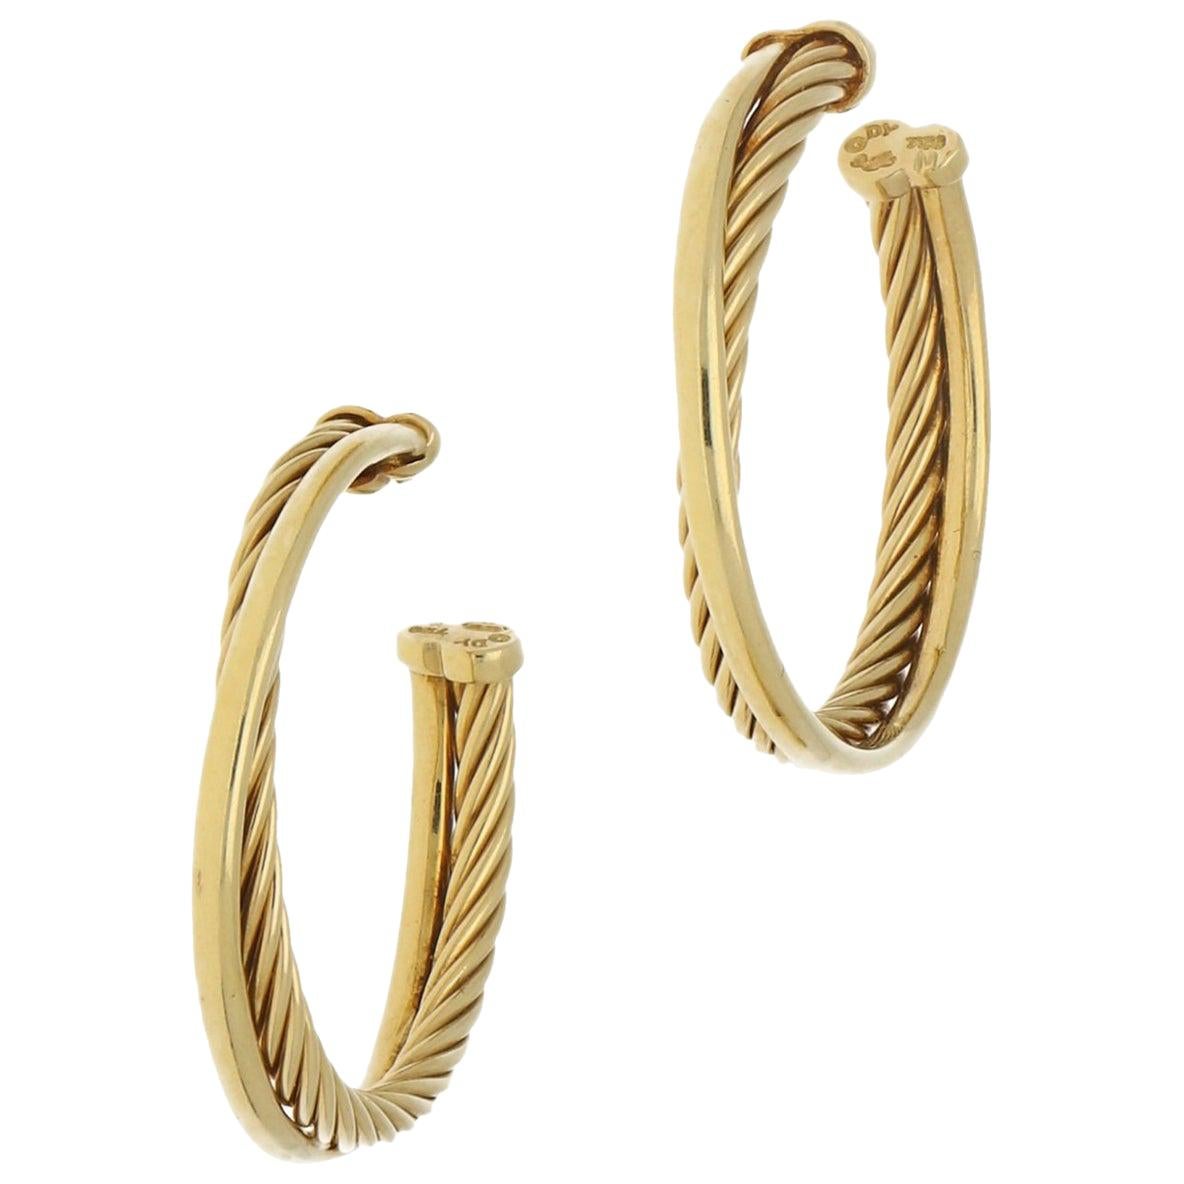 David Yurman 18 Karat Gold Hoop Earrings